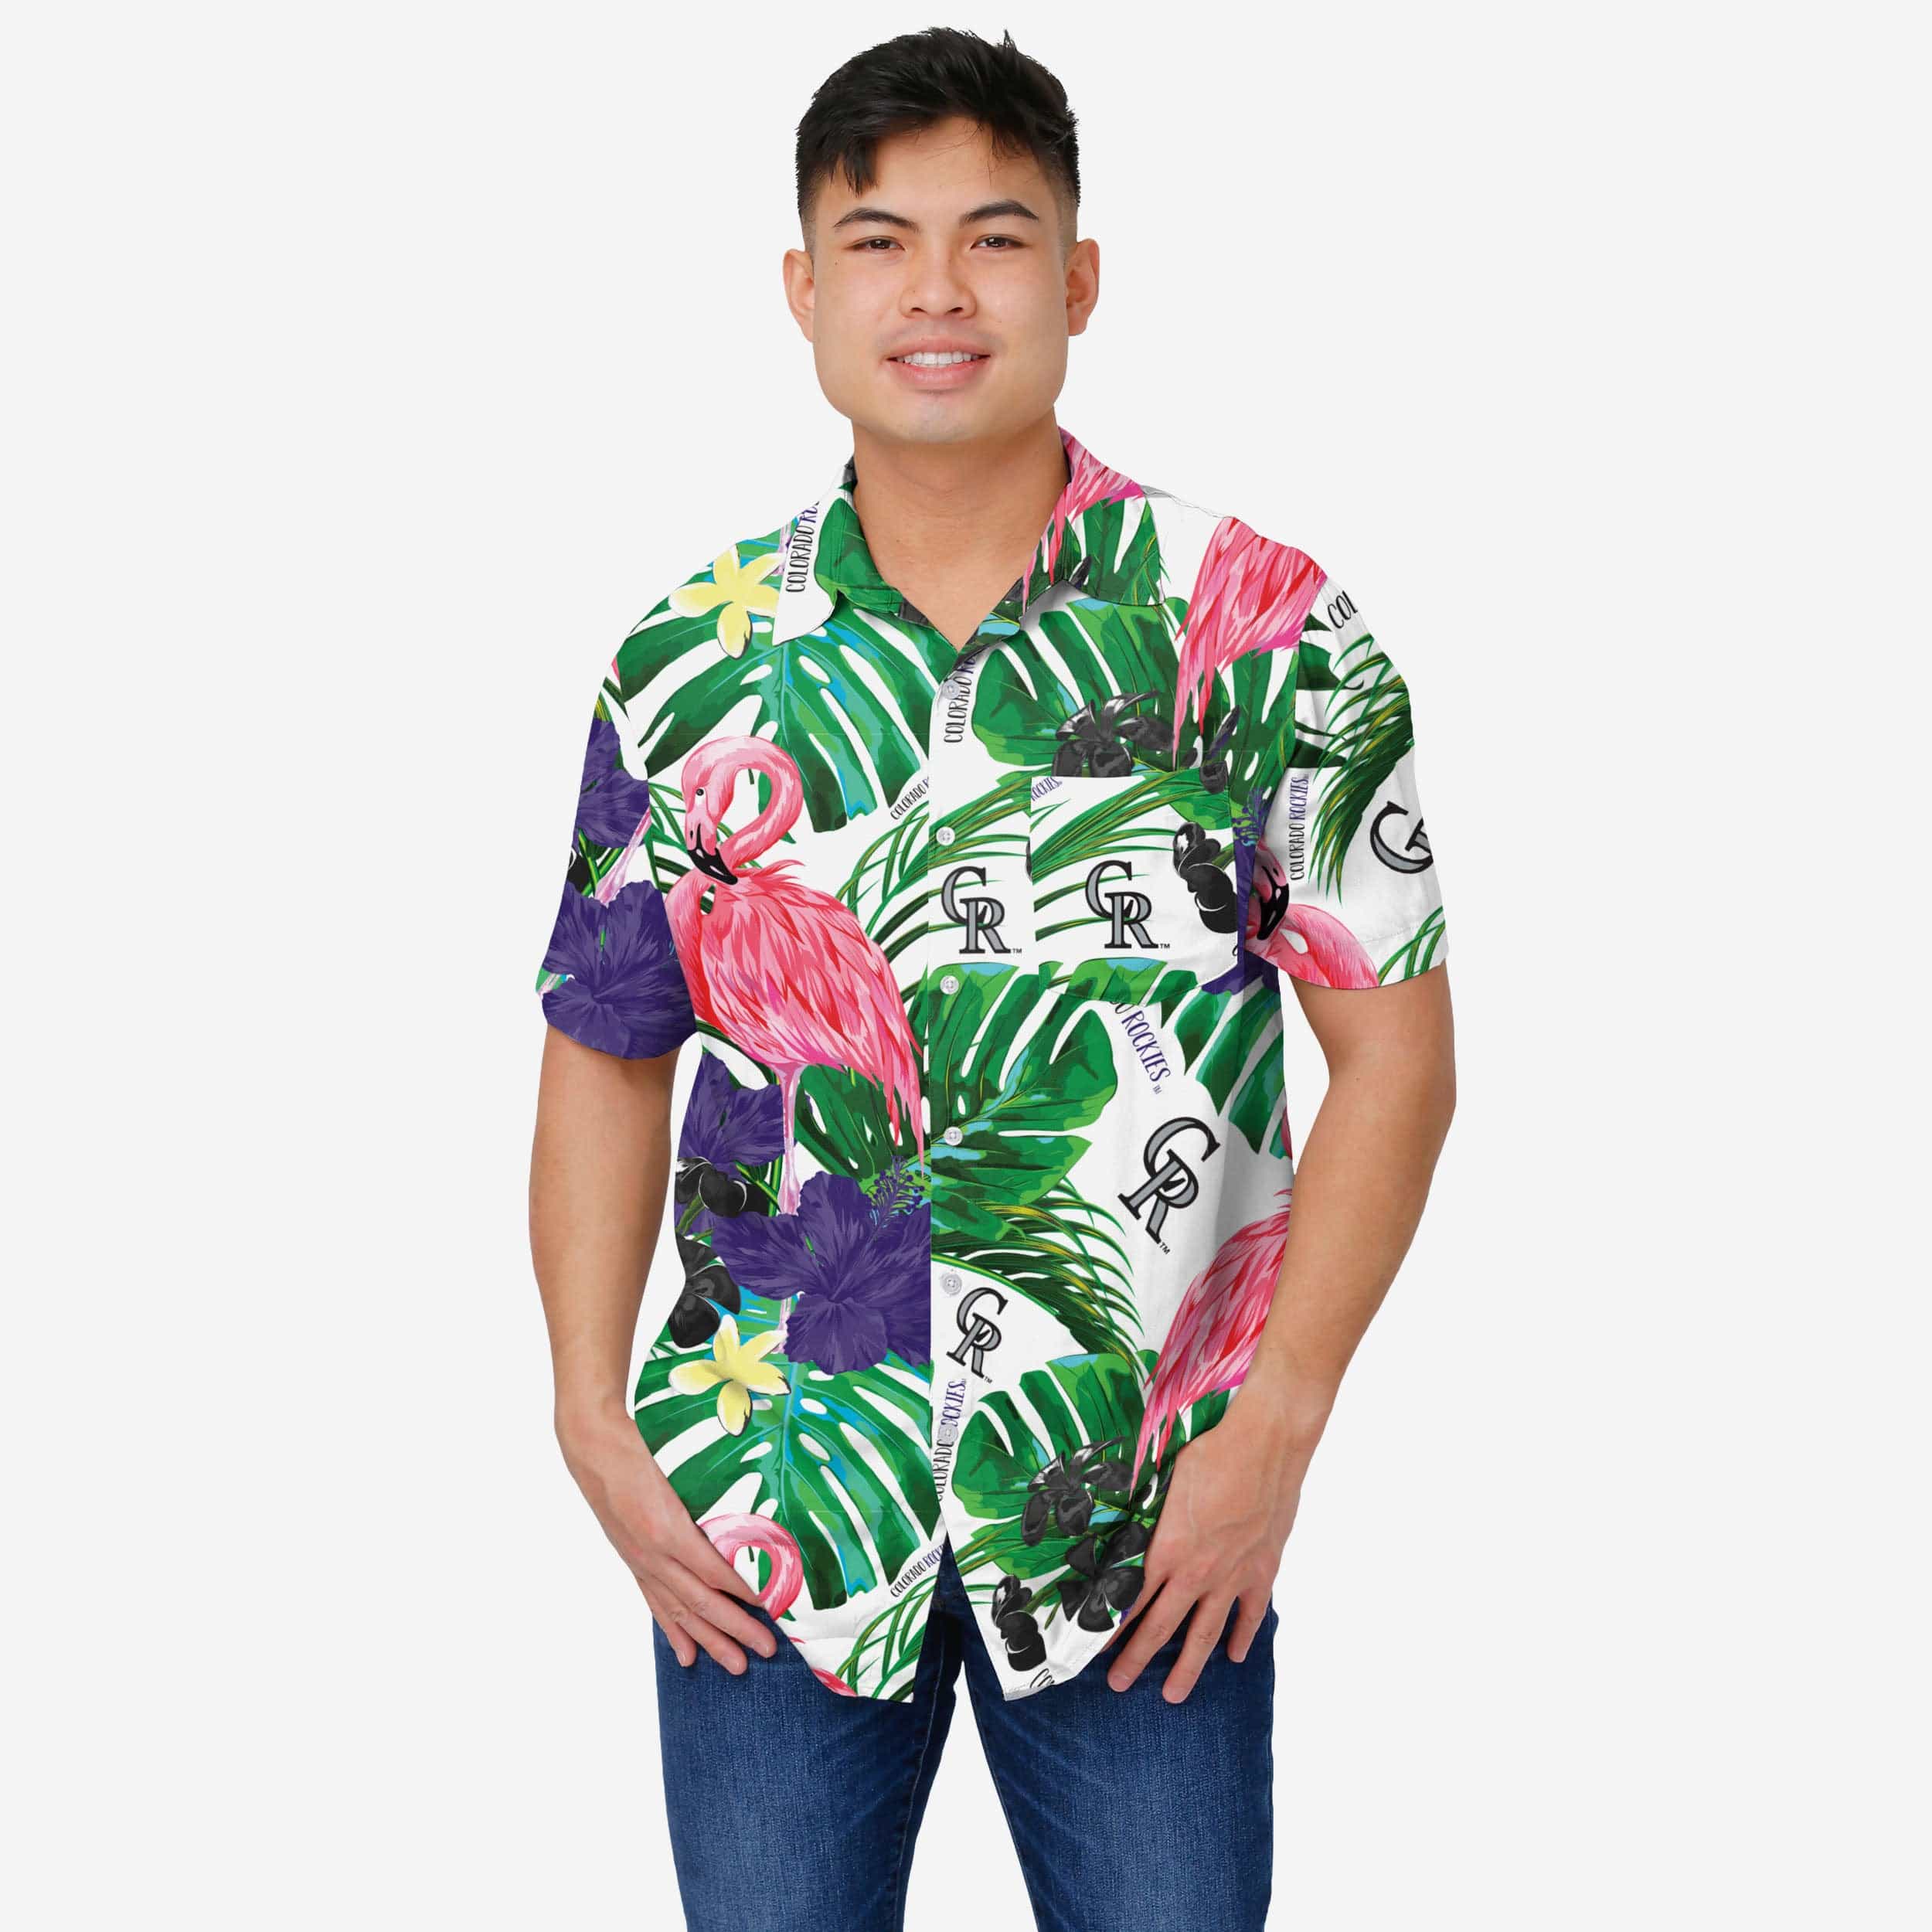 TRENDING] Colorado Rockies MLB-Personalized Hawaiian Shirt